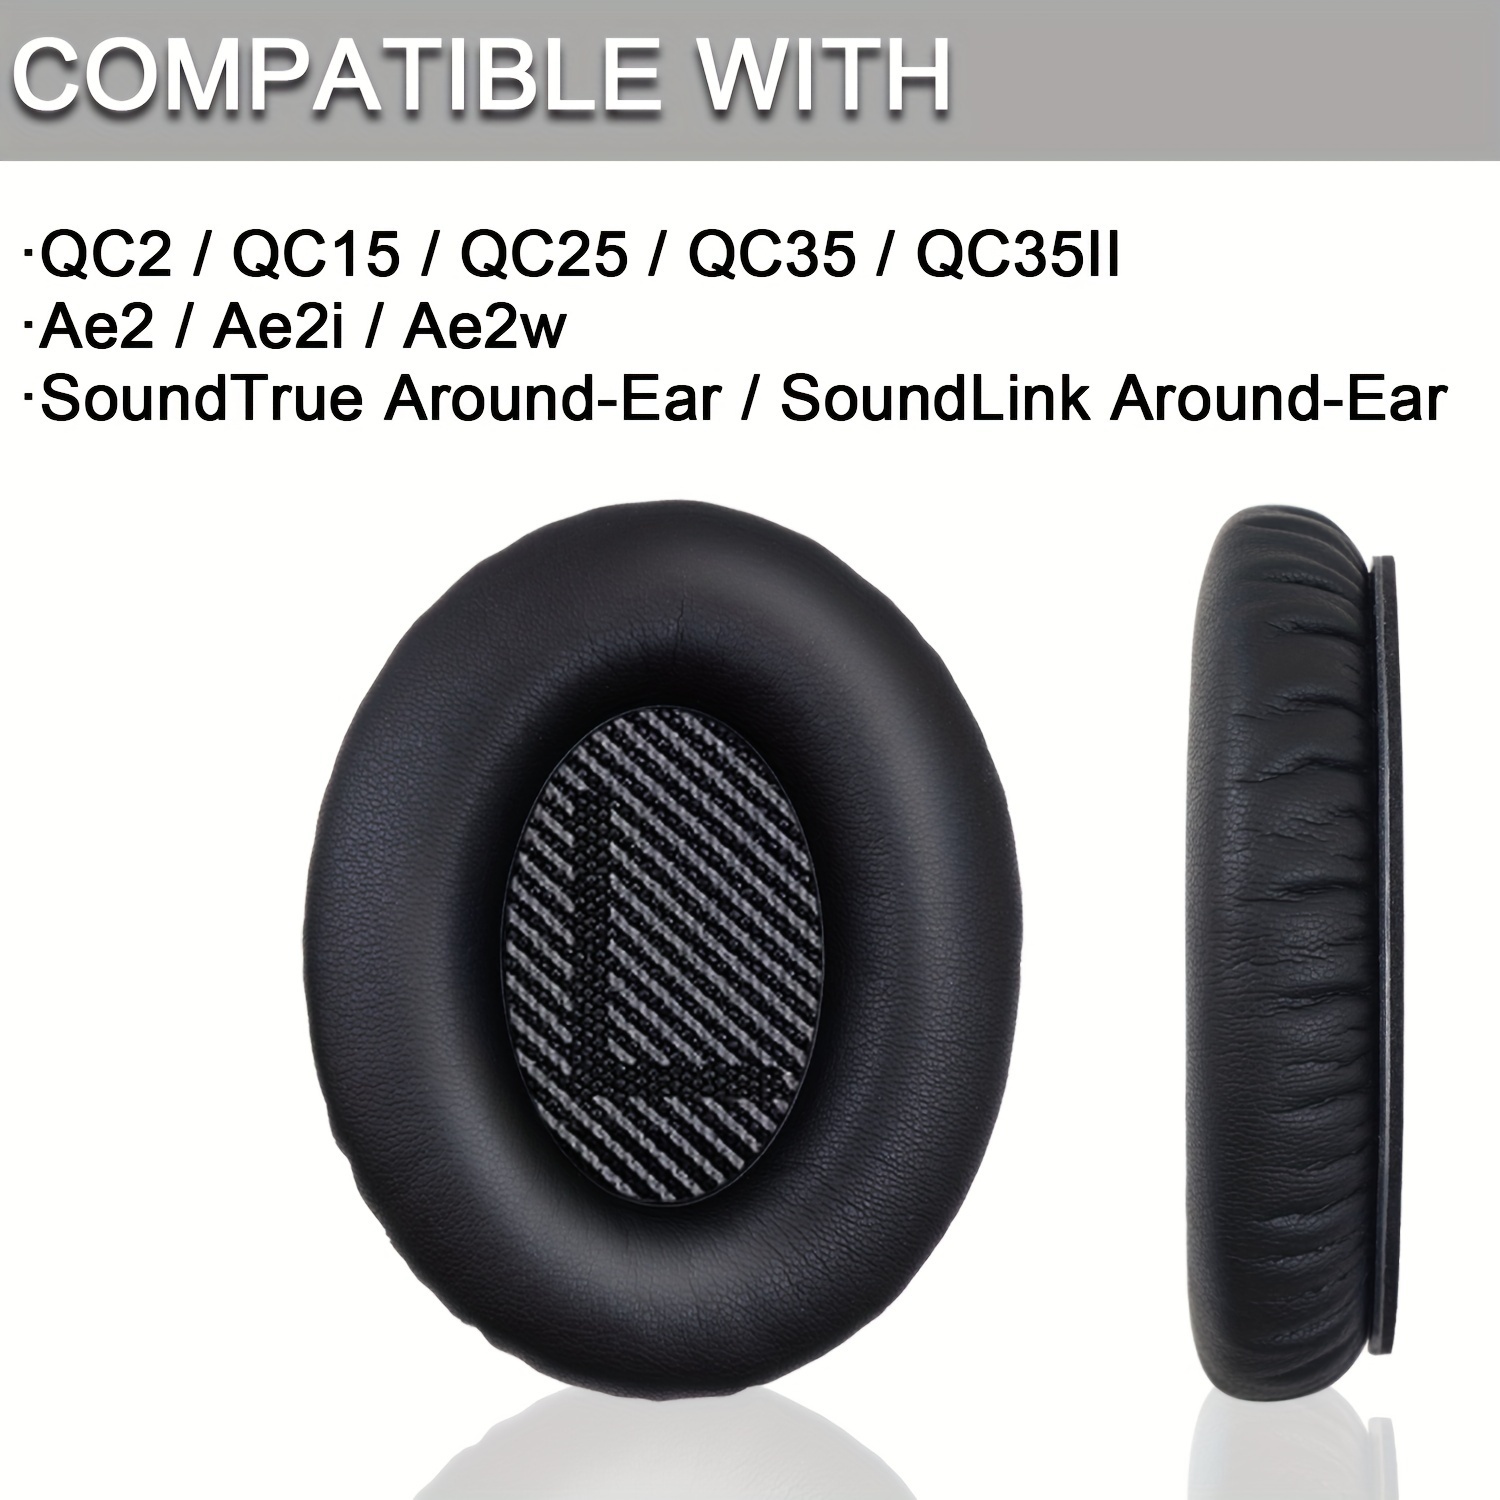 Coussinets d'oreille pour Bose QC35 I/II, QC25, QC15, QC 2 AE 2, AE